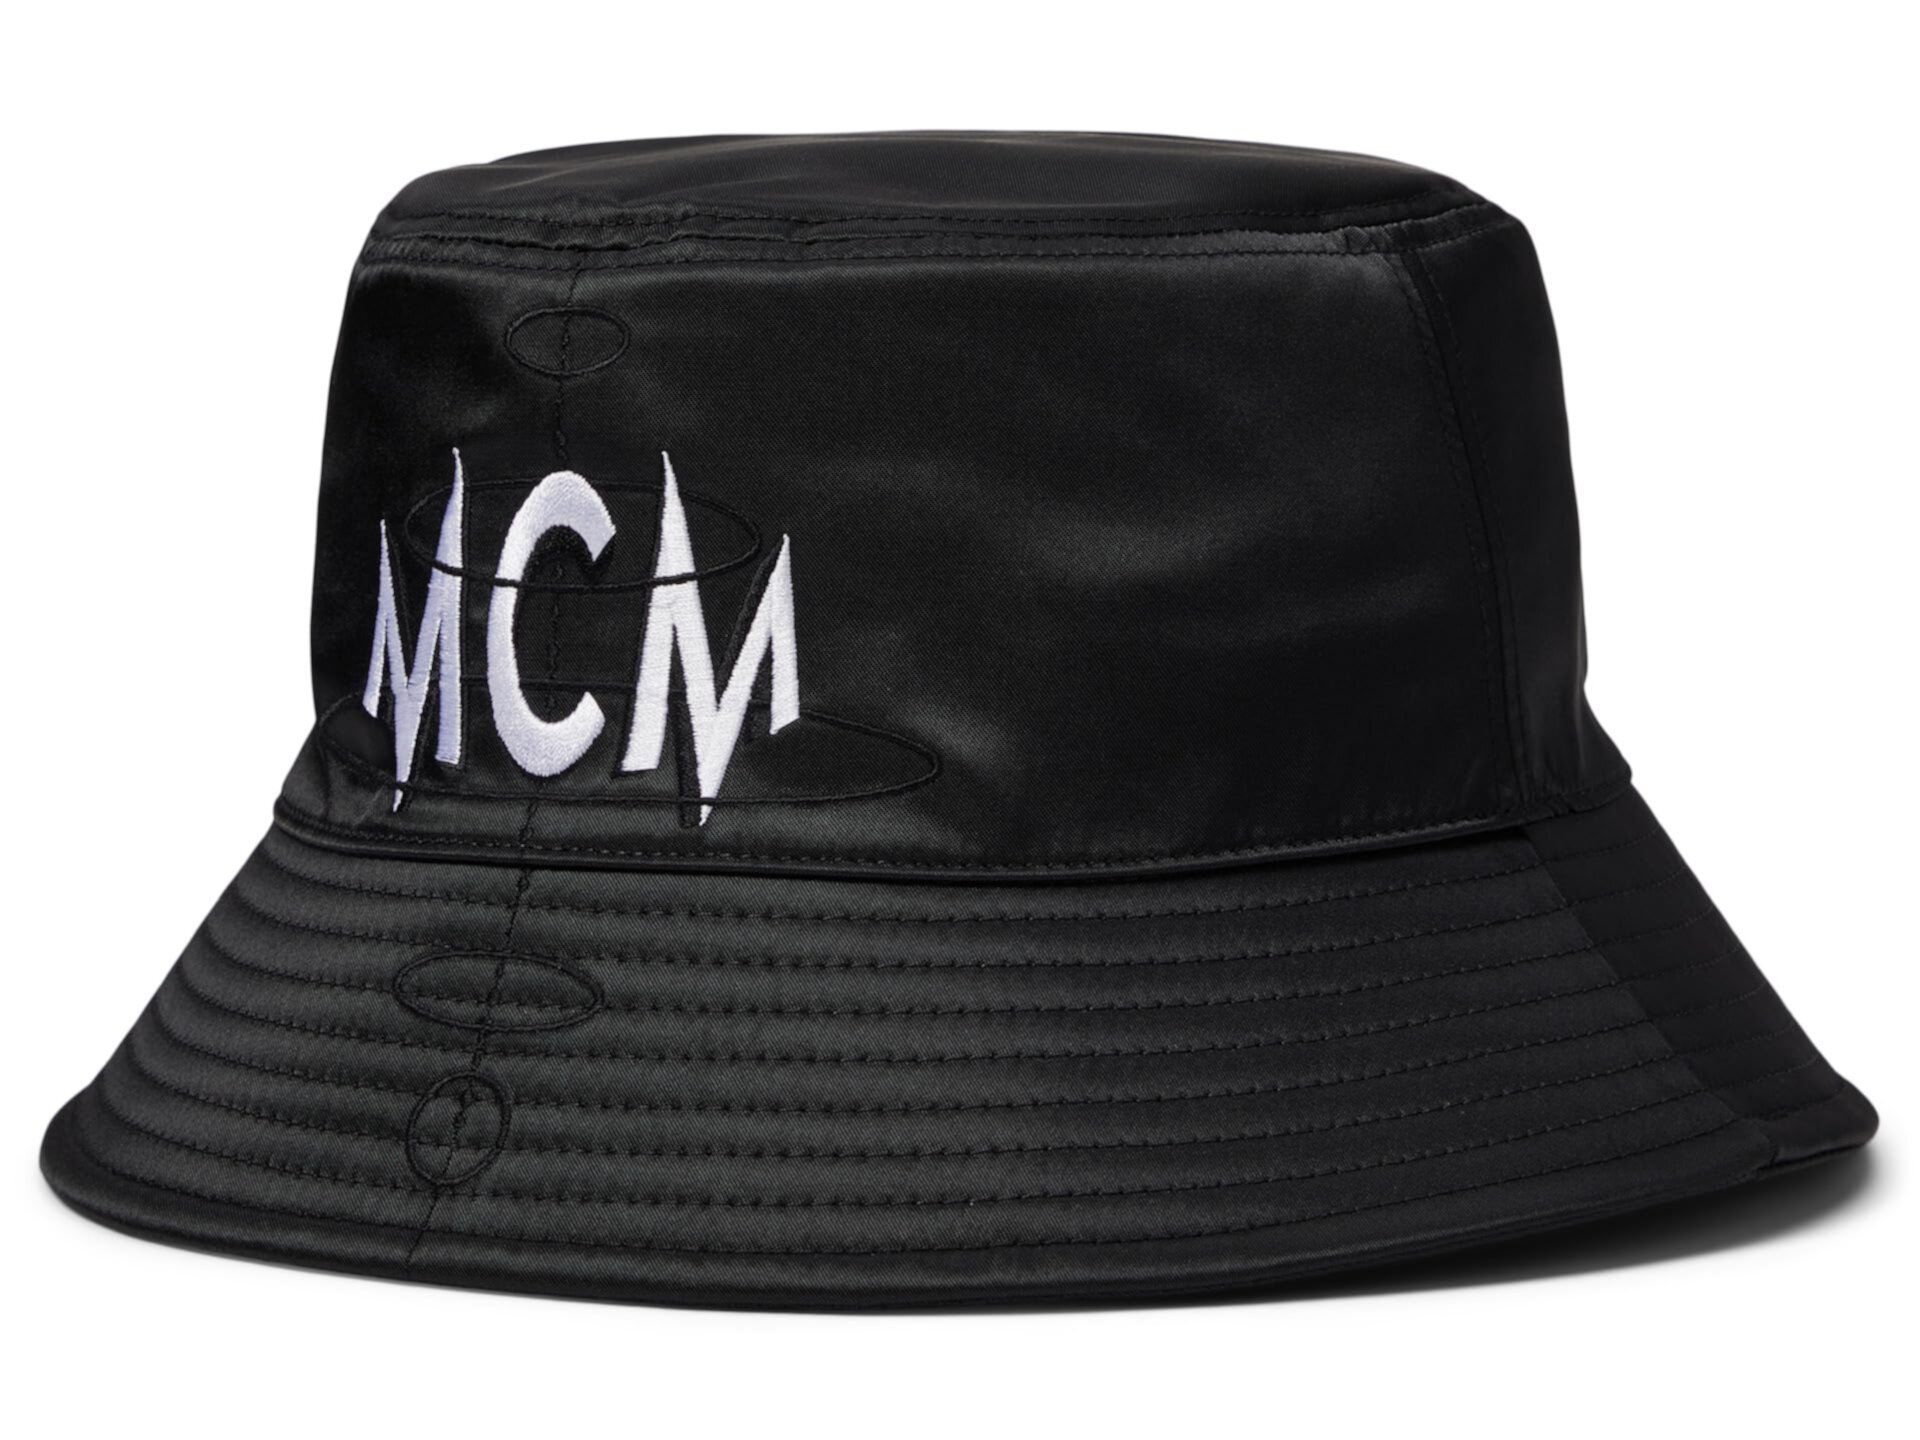 Col Nylon Bucket Hat MCM